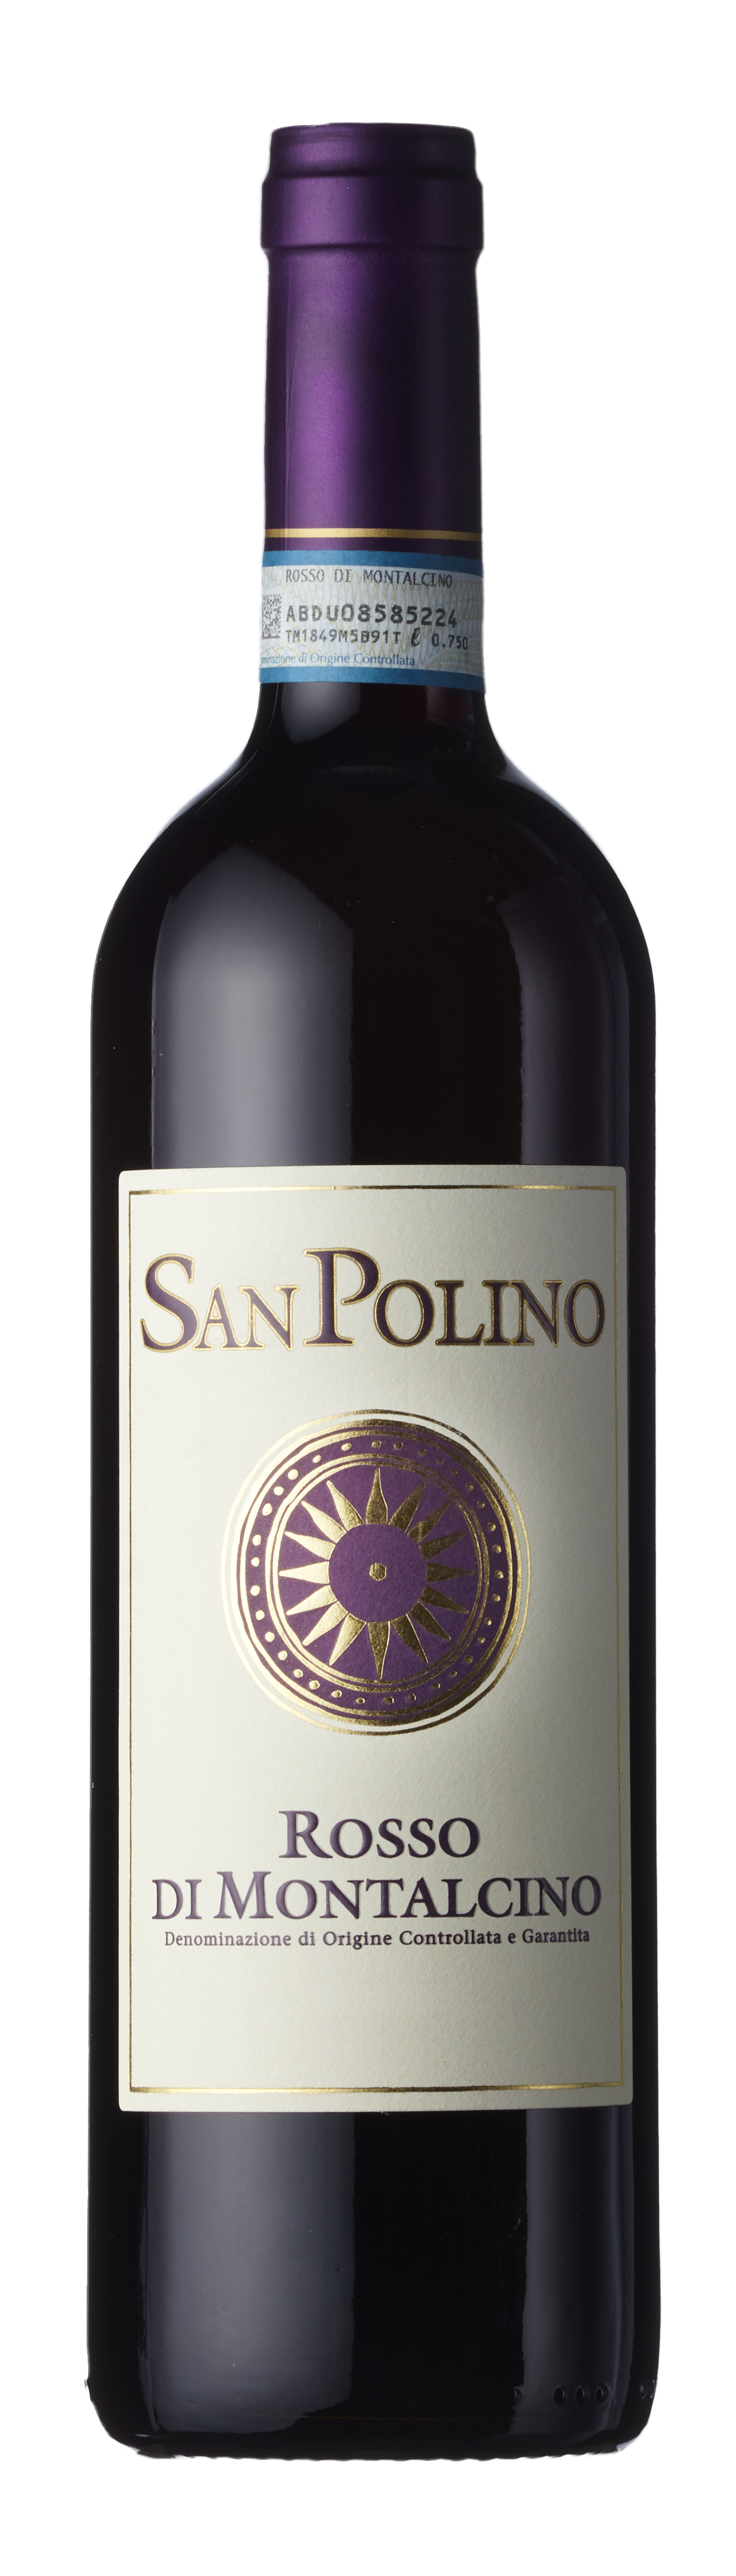 Bottle shot - San Polino, Rosso Di Montalcino, Tuscany, Italy